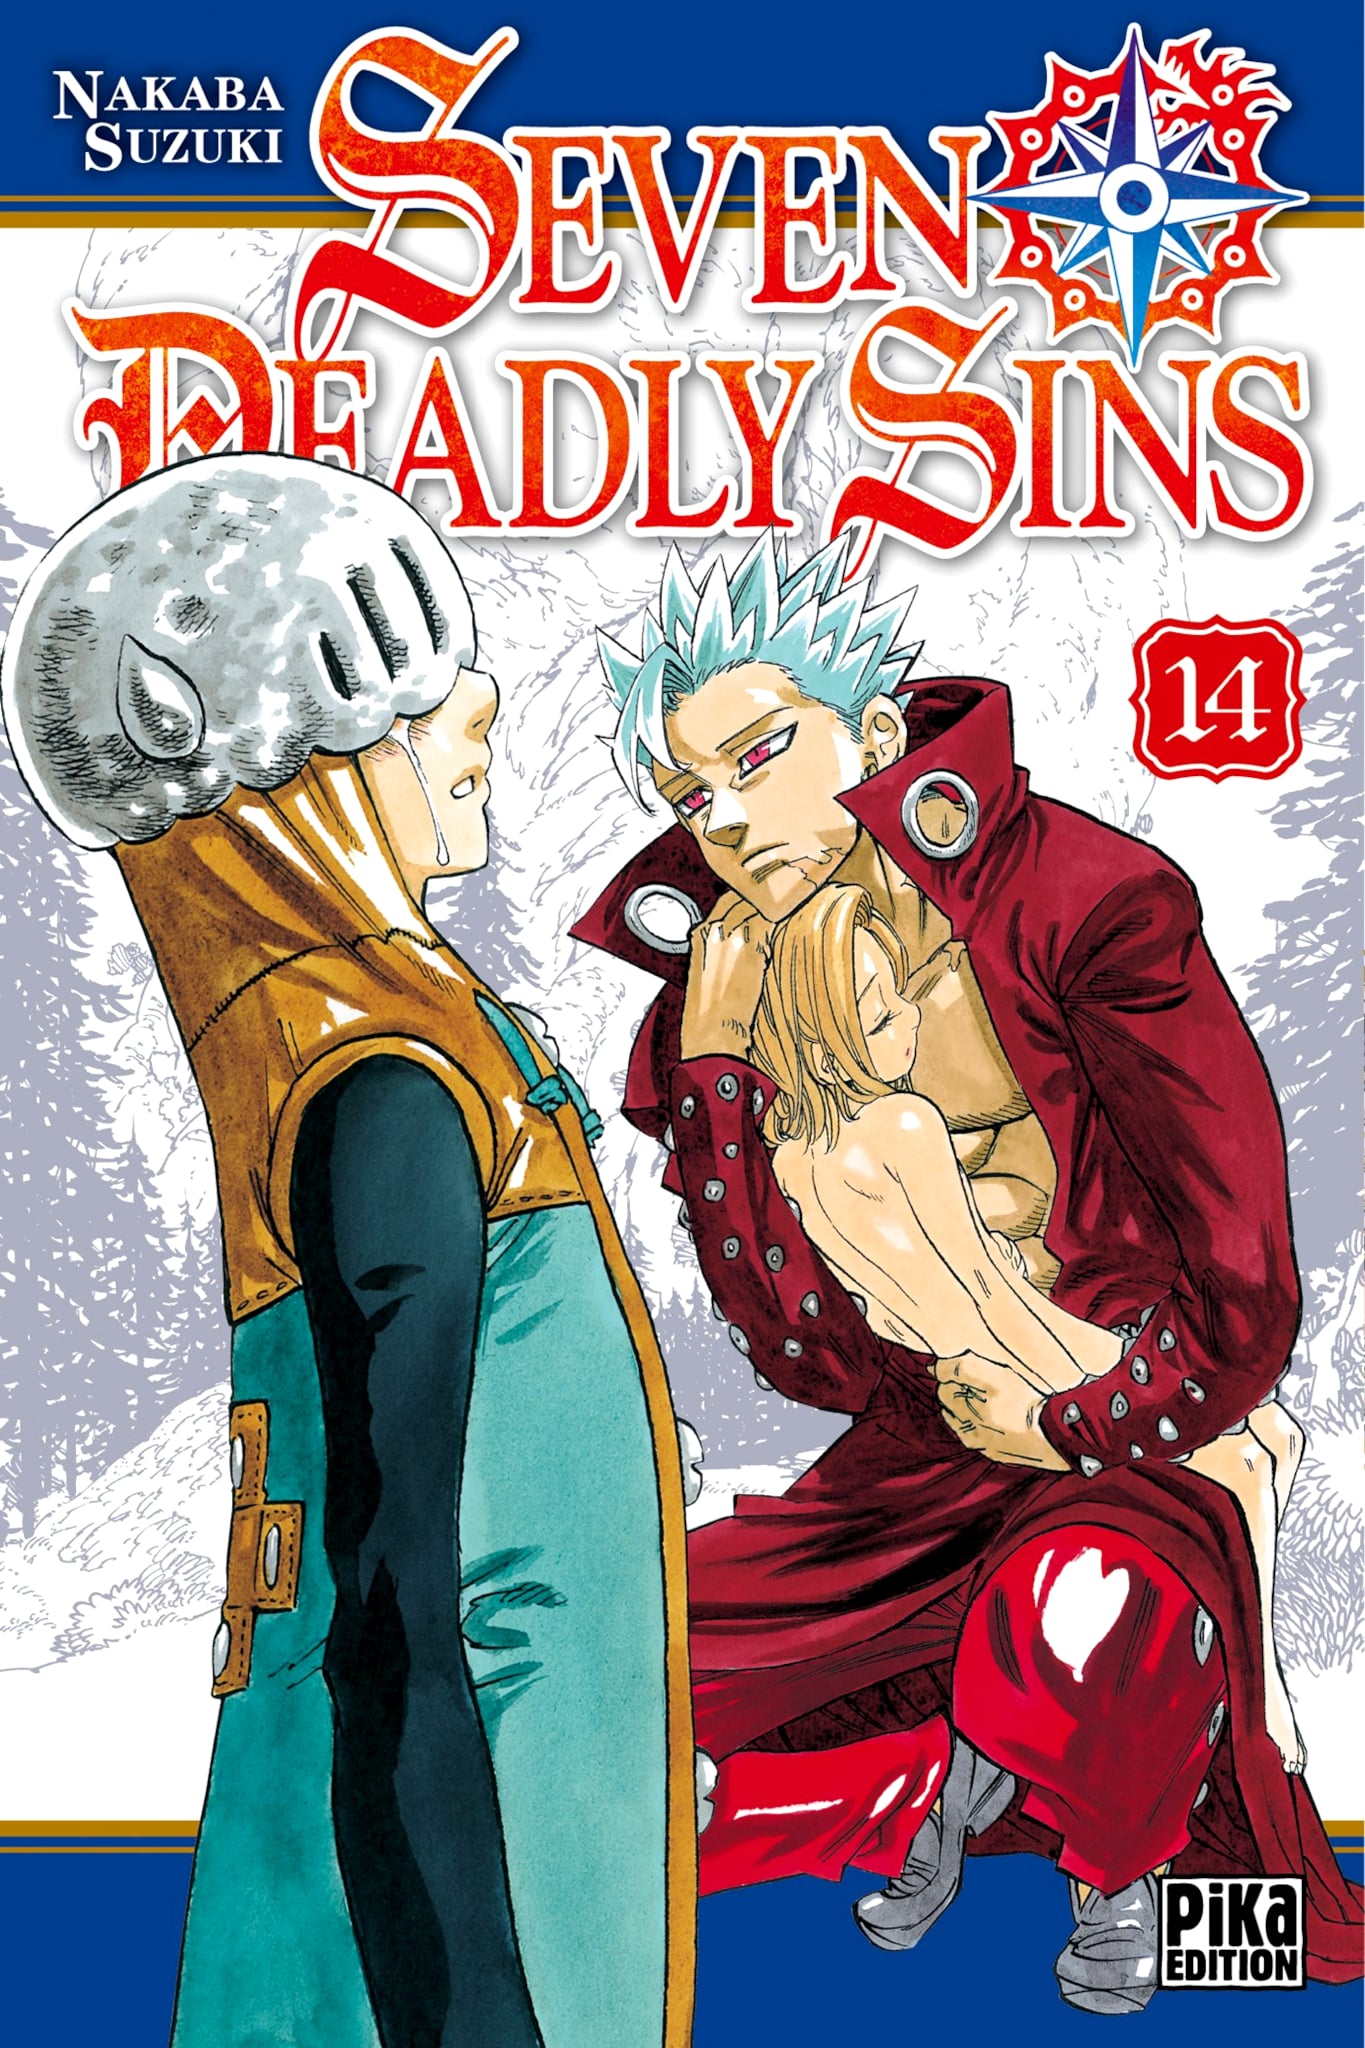 Tome 14 du manga The Seven Deadly Sins